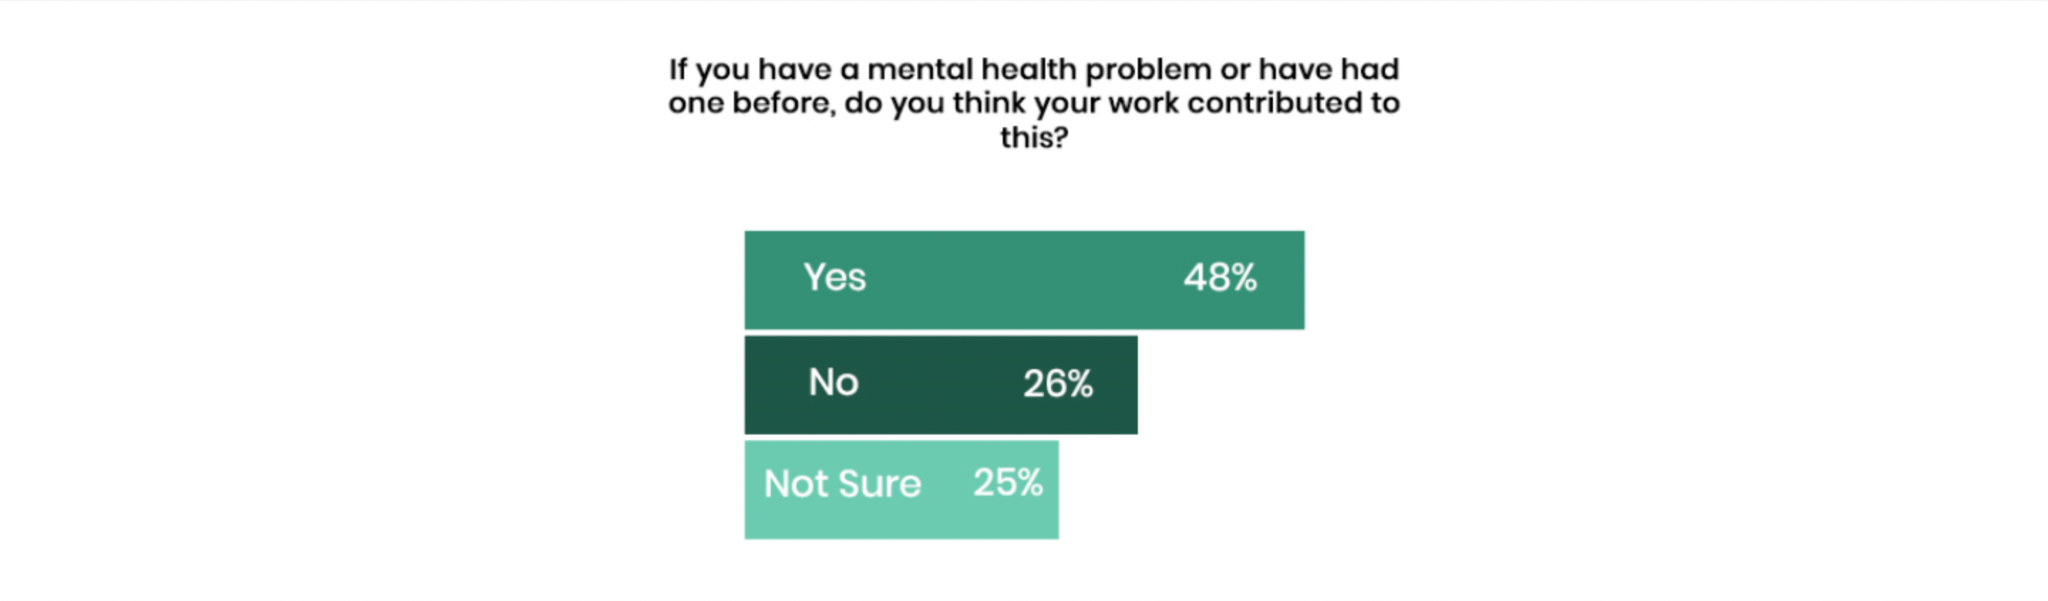 effect_of_work_on_mental_health